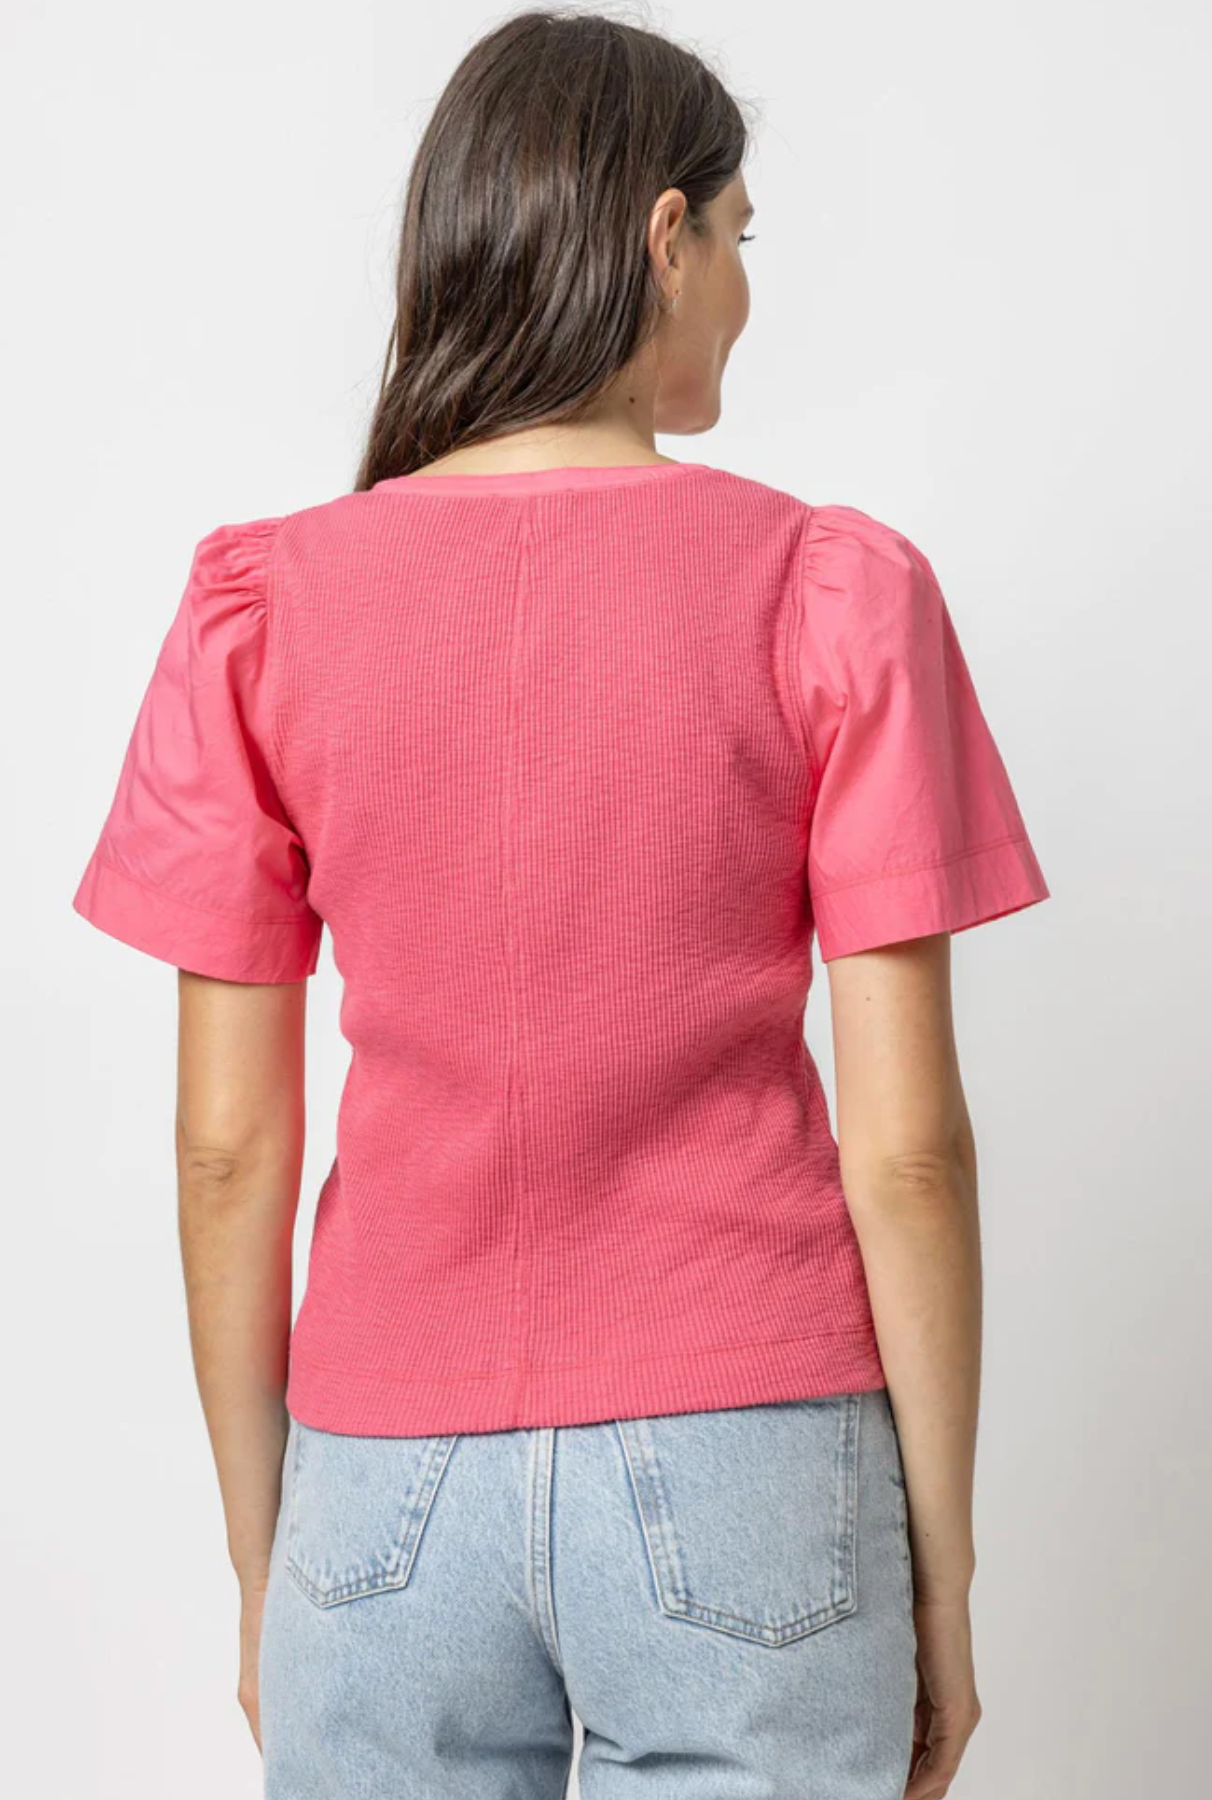 Woven Sleeve Split Neck Top in Rosebud - The French Shoppe